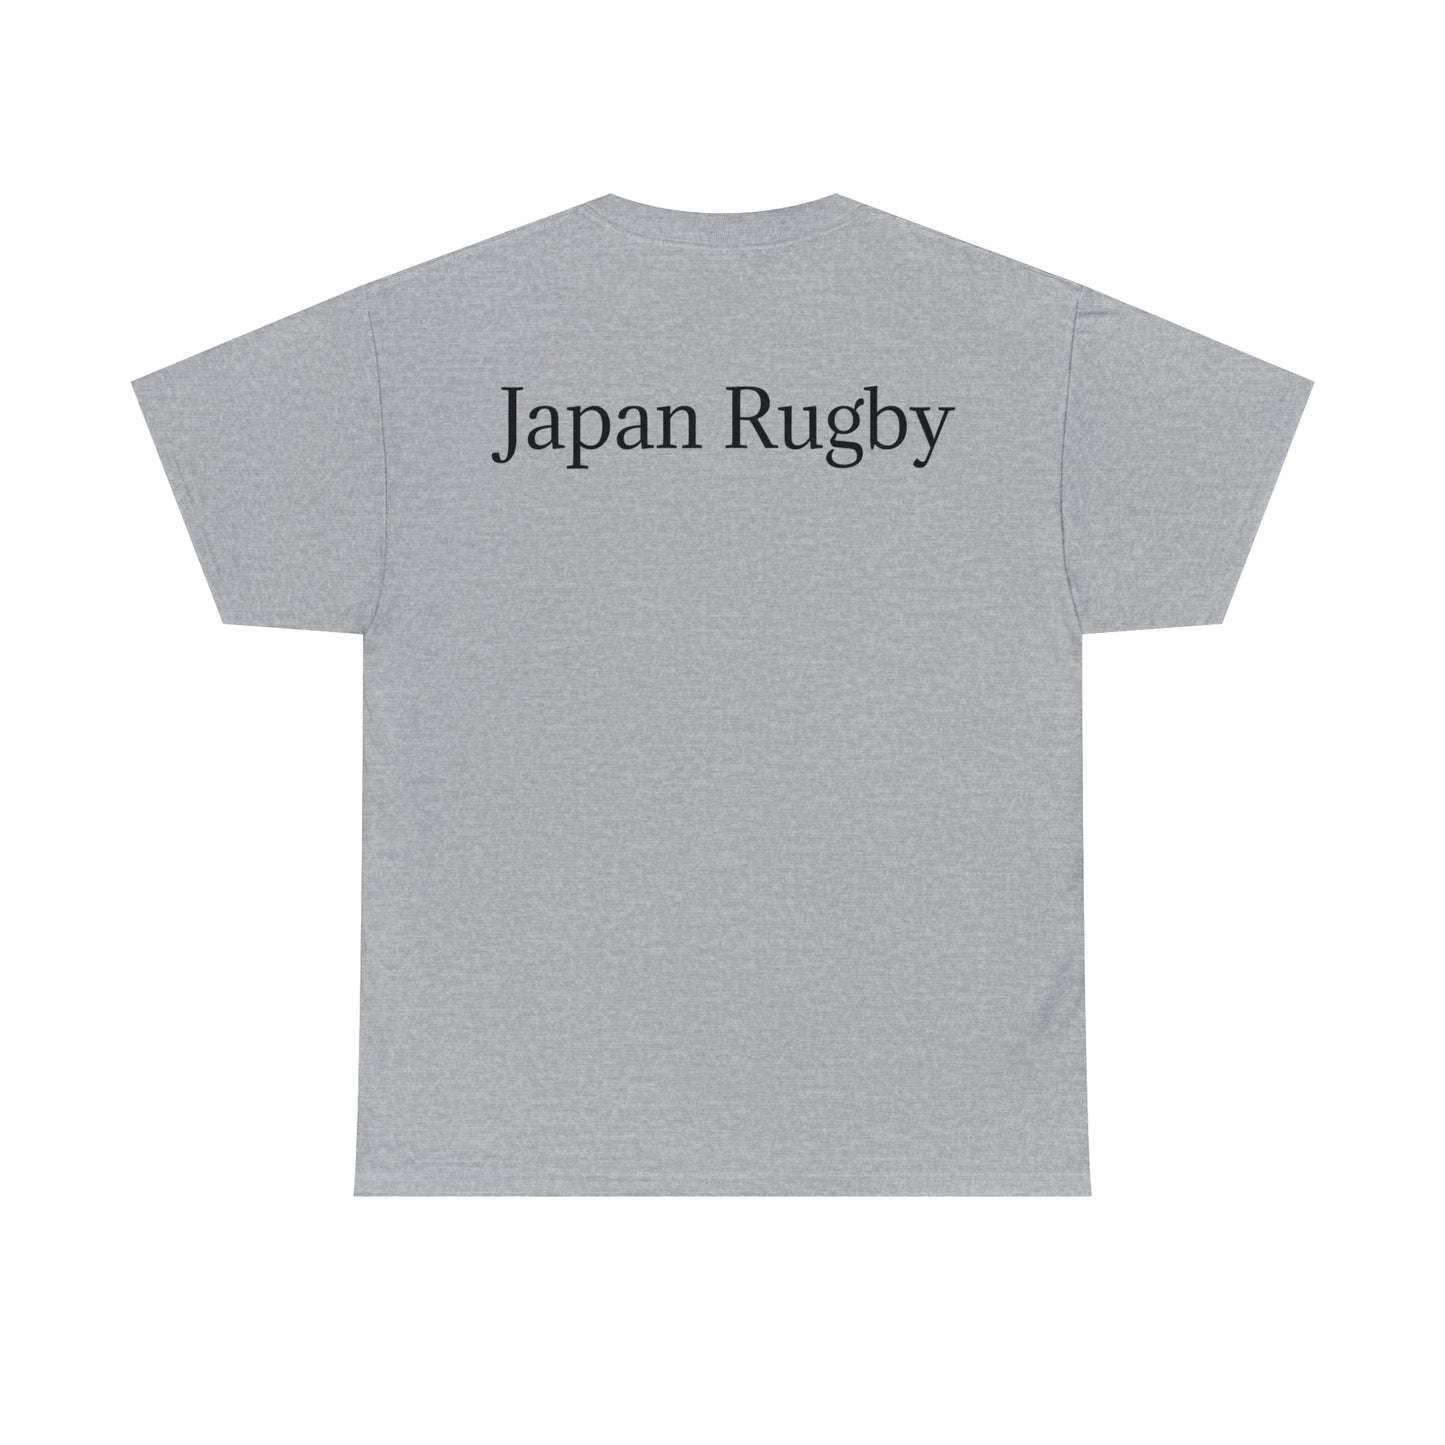 Japan lifting RWC - light shirts